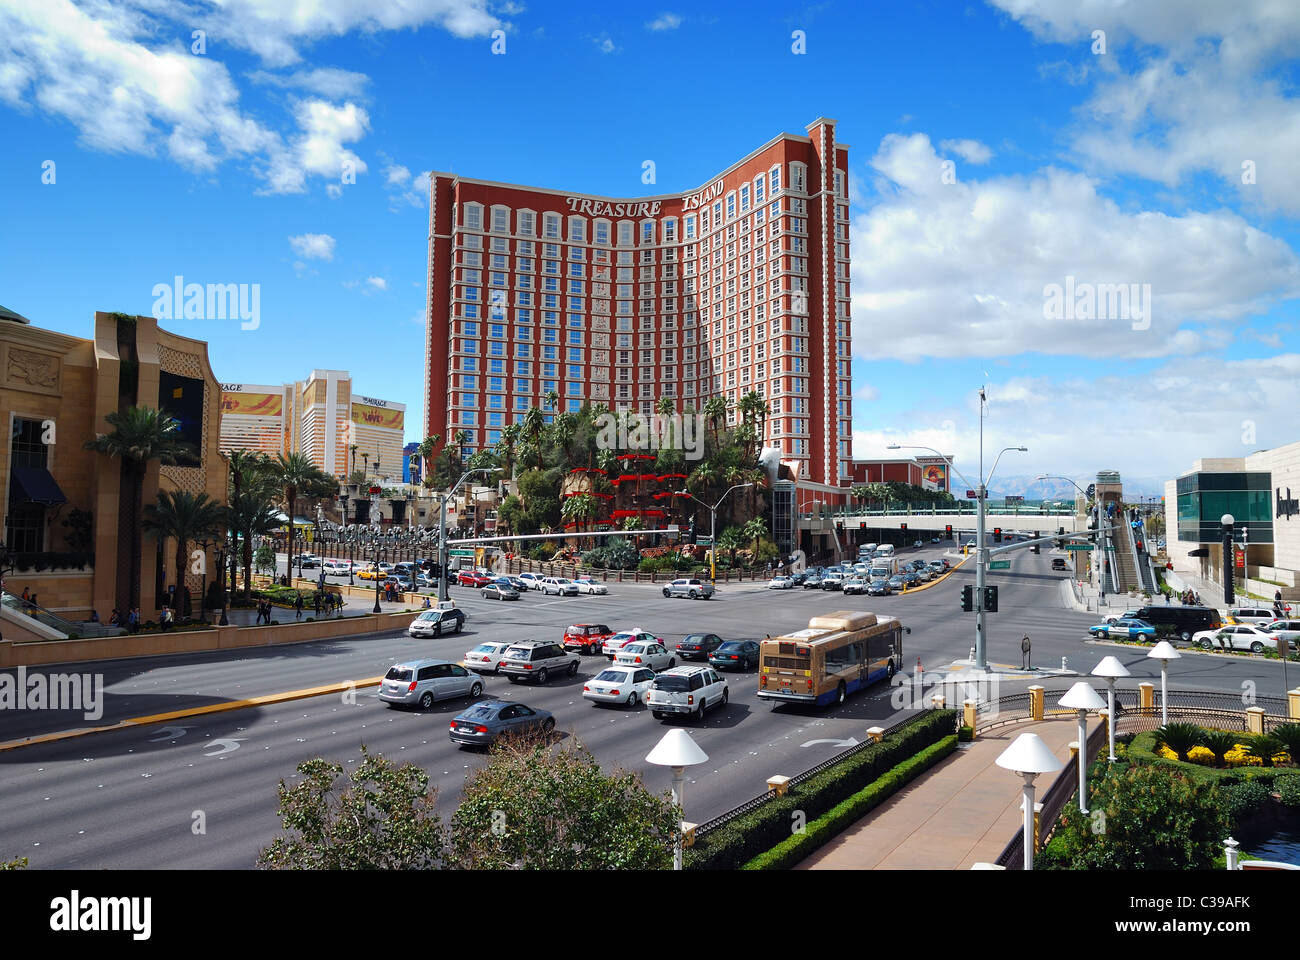 Las Vegas Street view with Treasure Island and traffic. Stock Photo